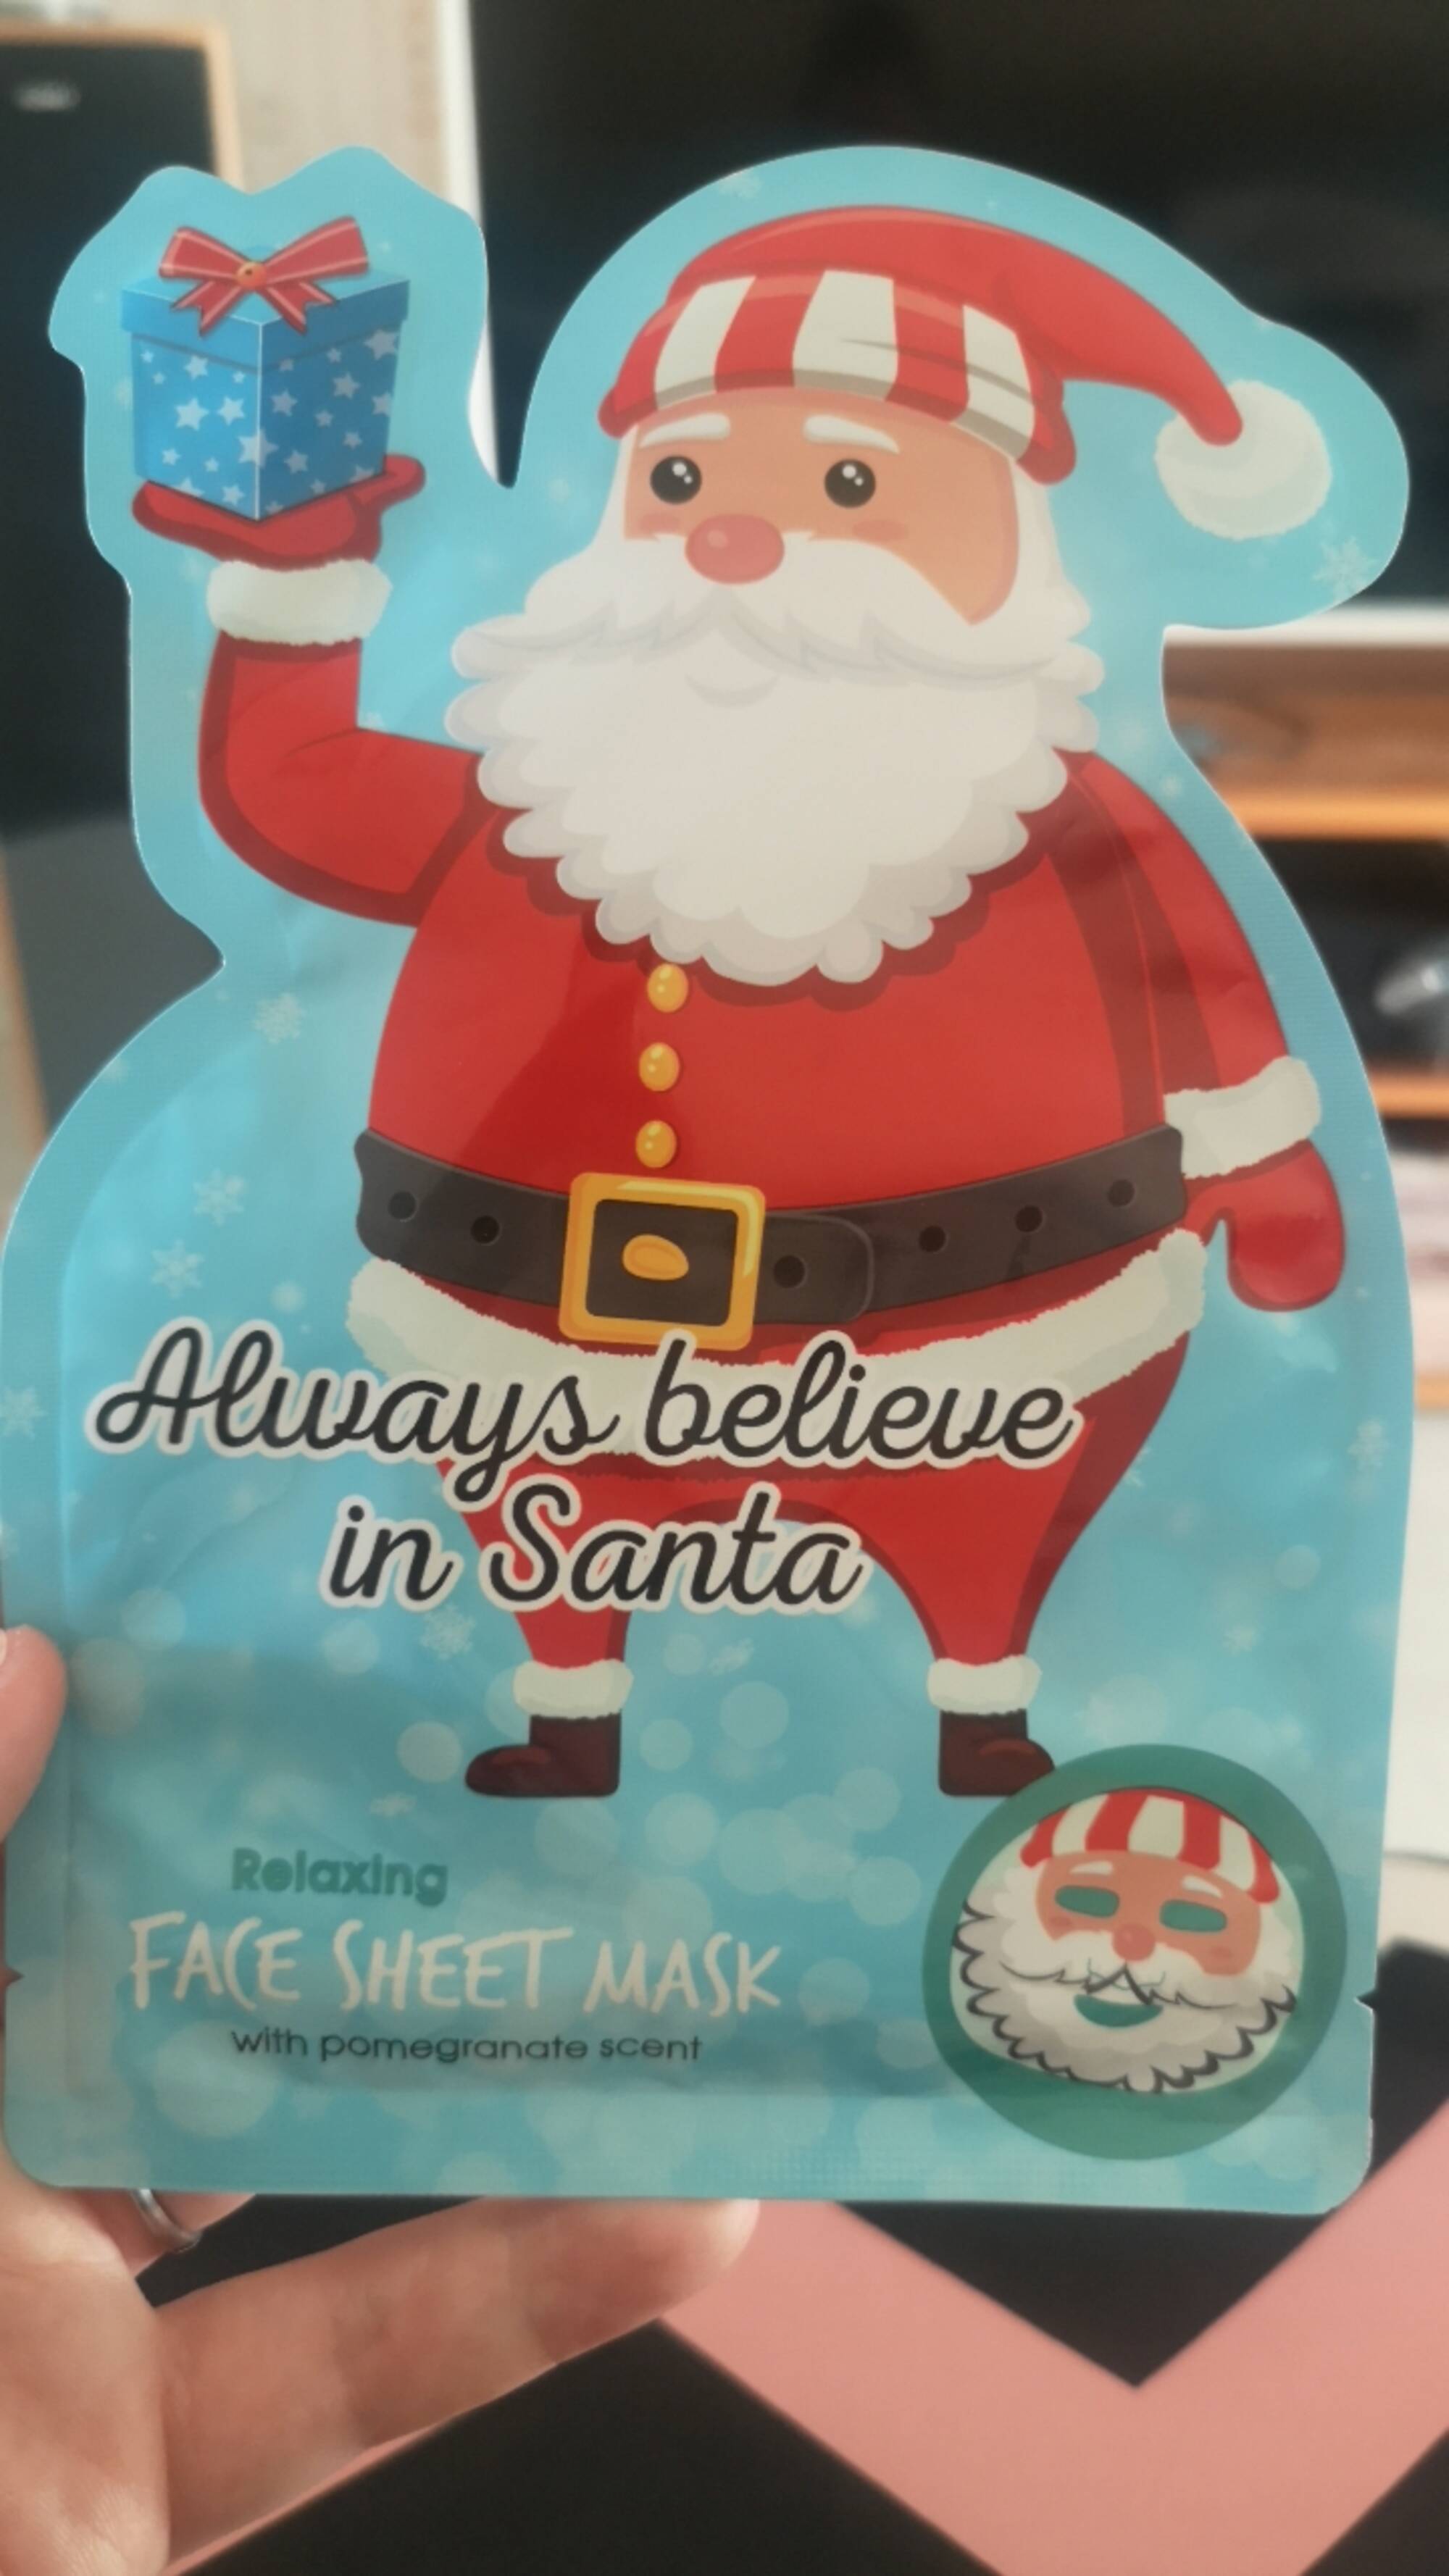 MAXBRANDS - Always believe in Santa - Face sheet mask